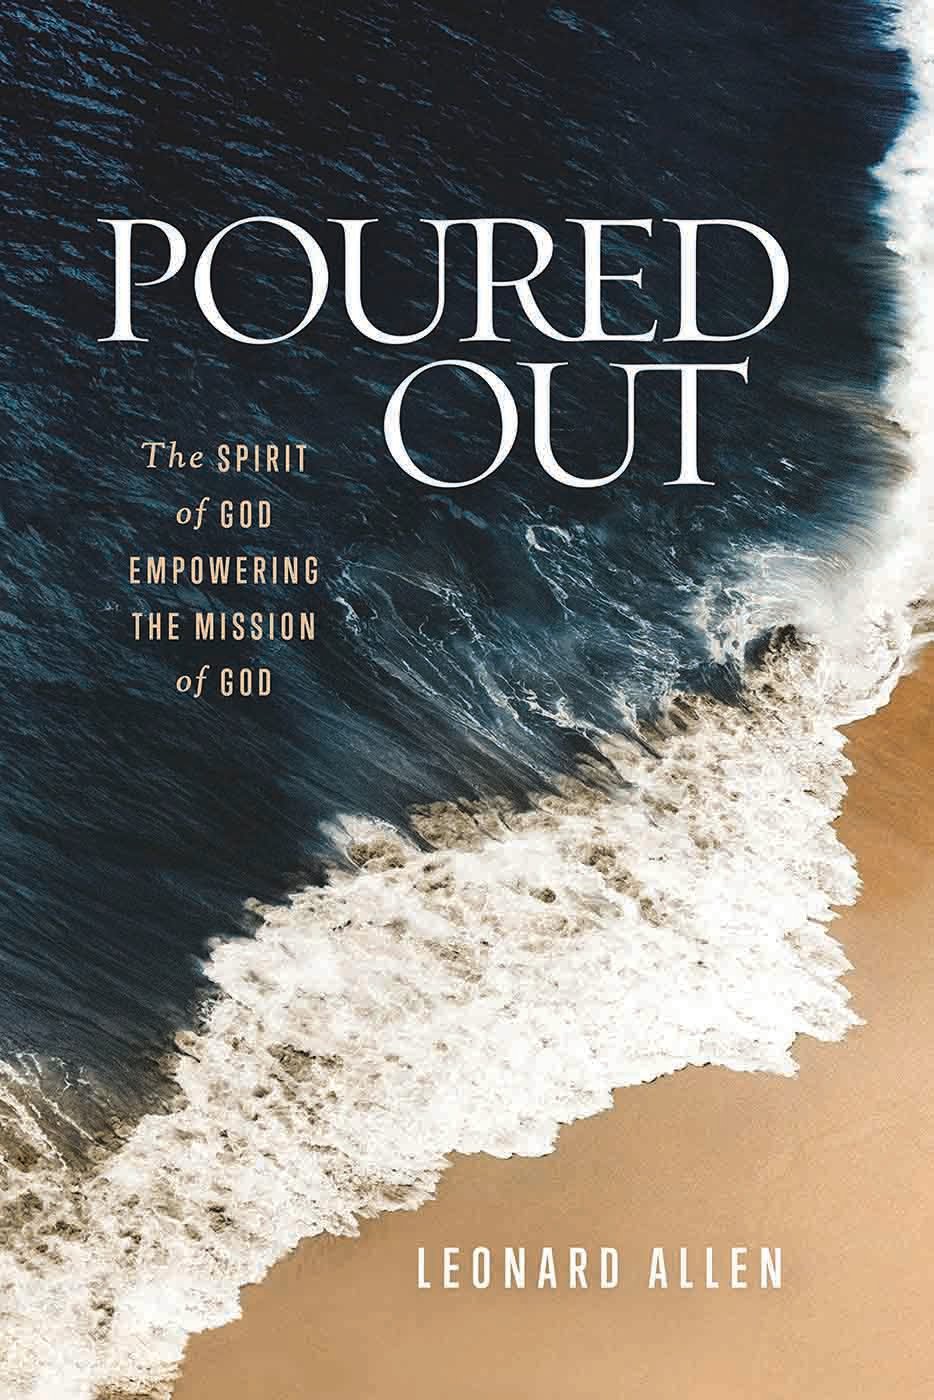 Leonard Allen. Poured Out: The Spirit of God Empowering the Mission of God. Abilene Texas: Abilene Christian University Press, 2018. 208 pages.